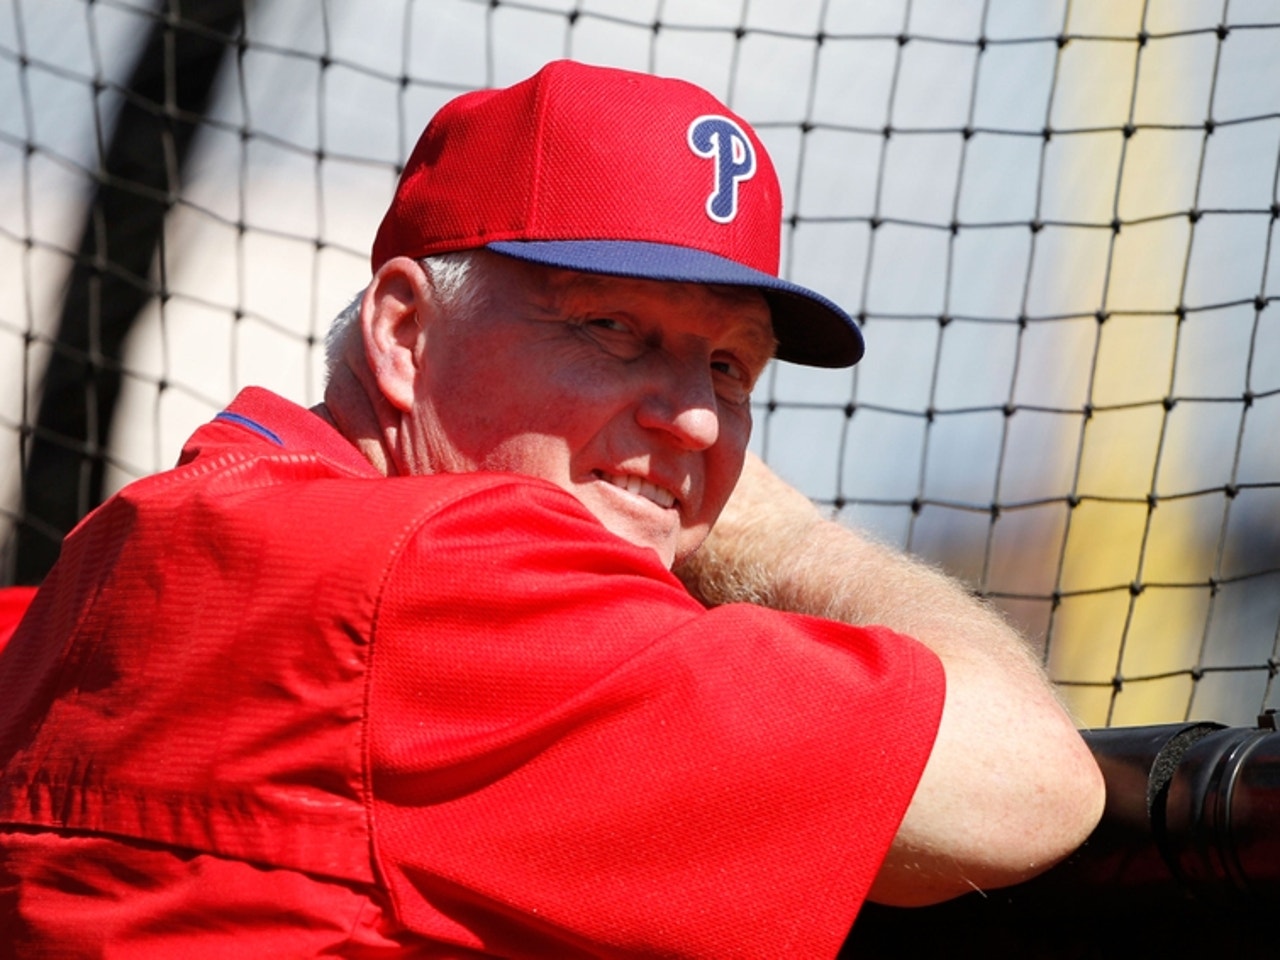 MLB New Era Philadelphia Phillies Pinch Hitter Hat - Red